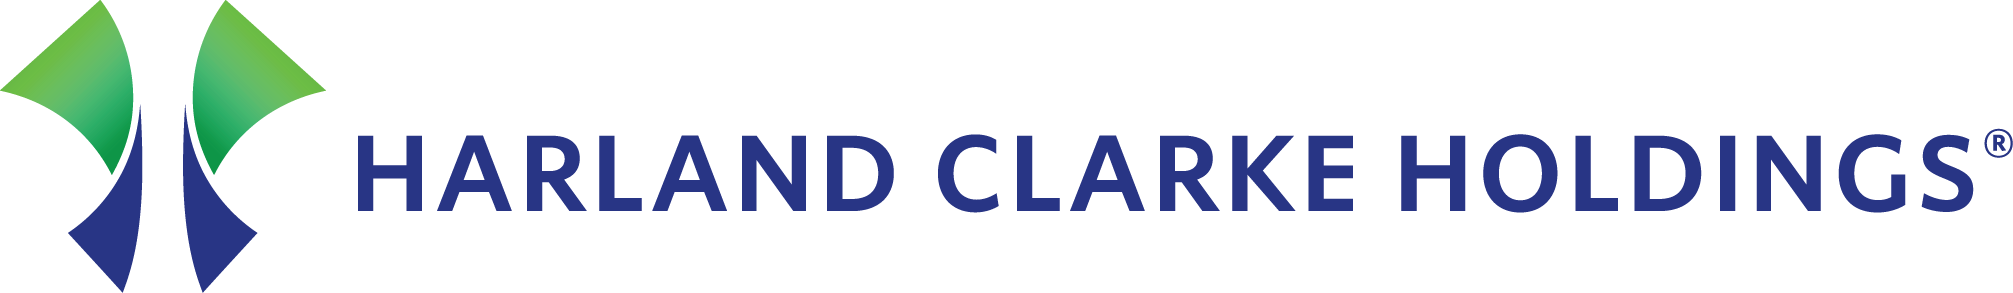 Harland Clarke Holdings logo